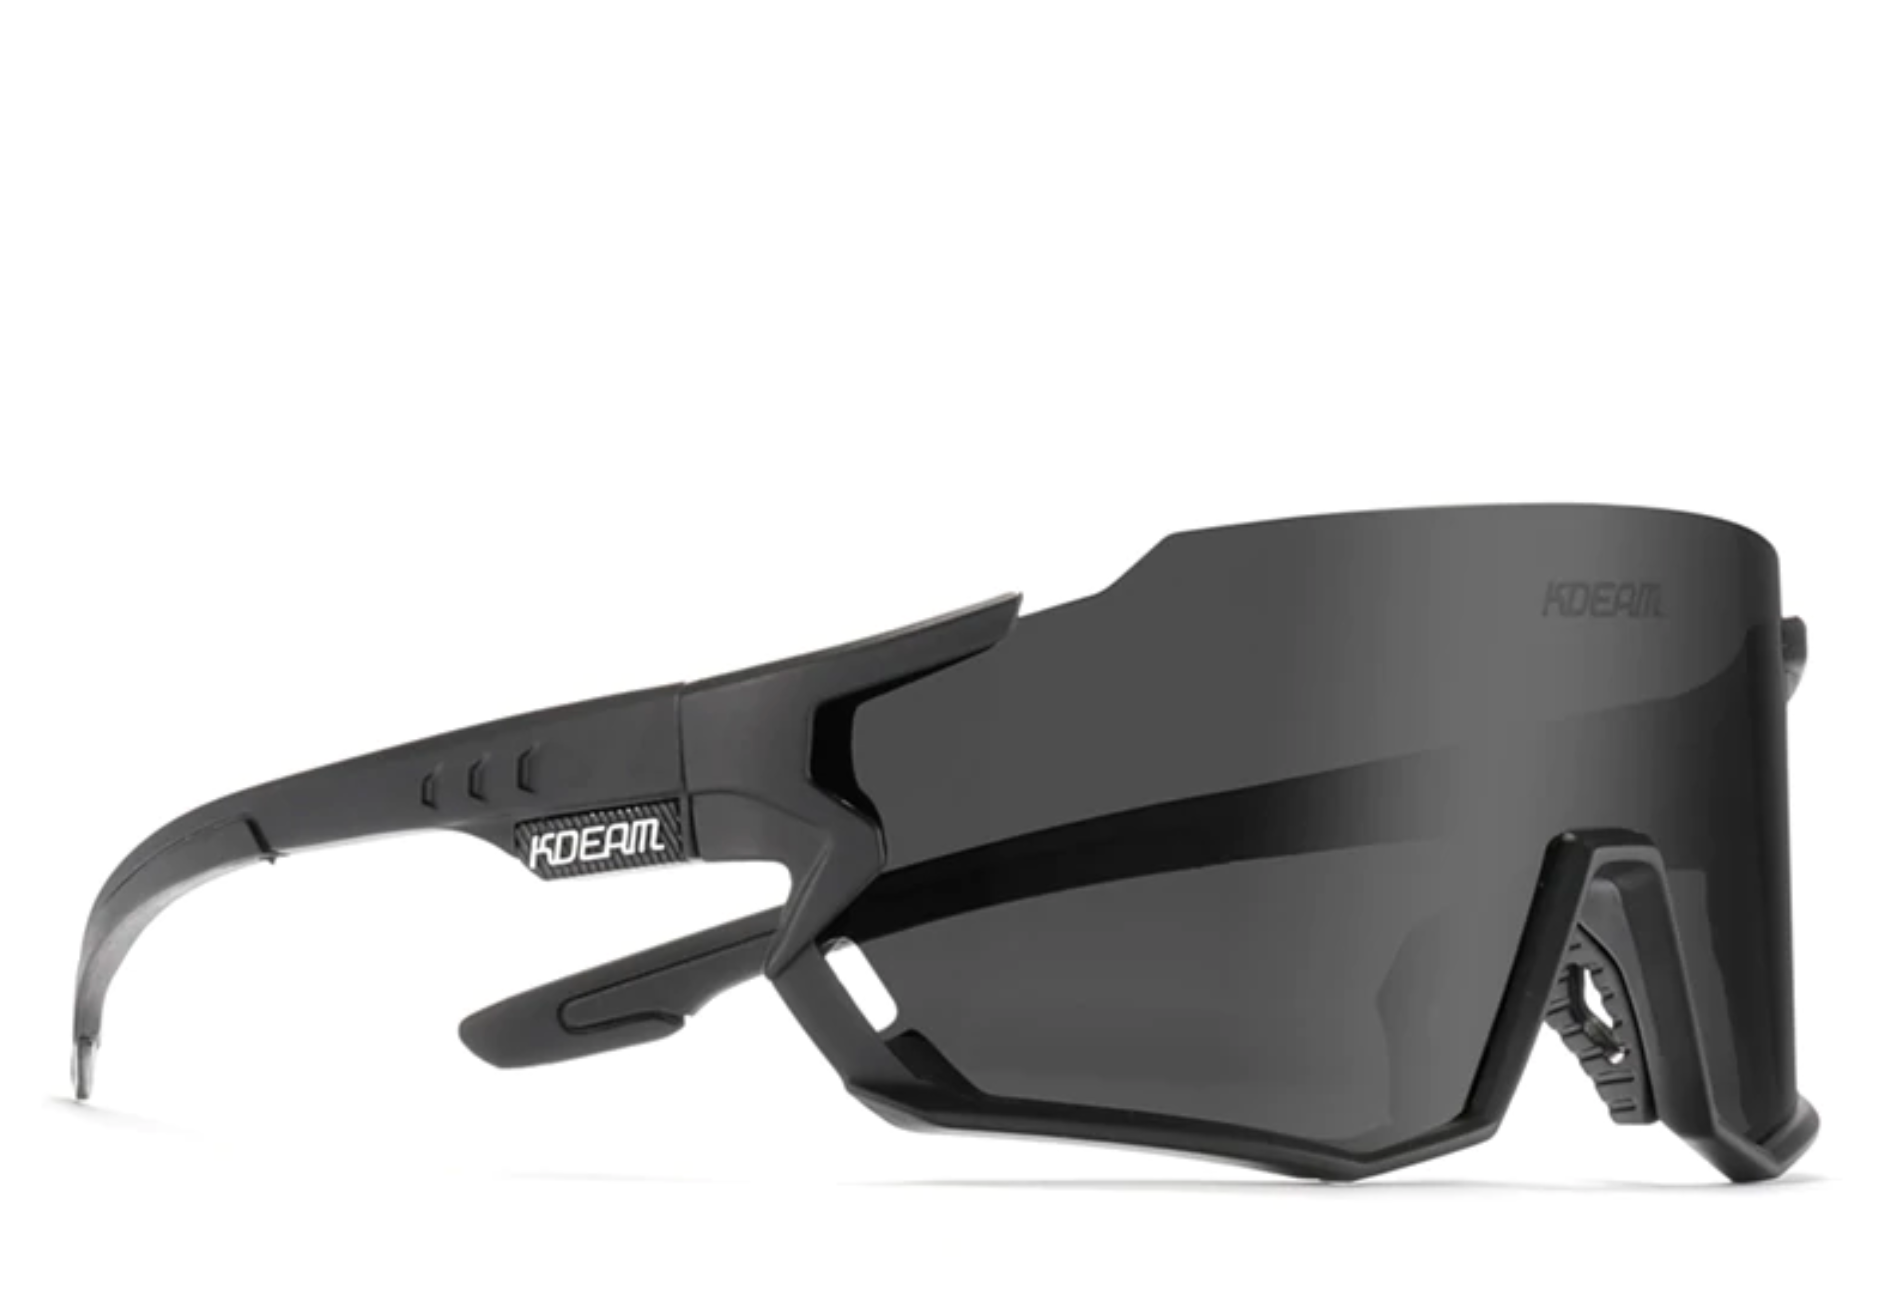 KDEAM ® Sunglasses, Official Website